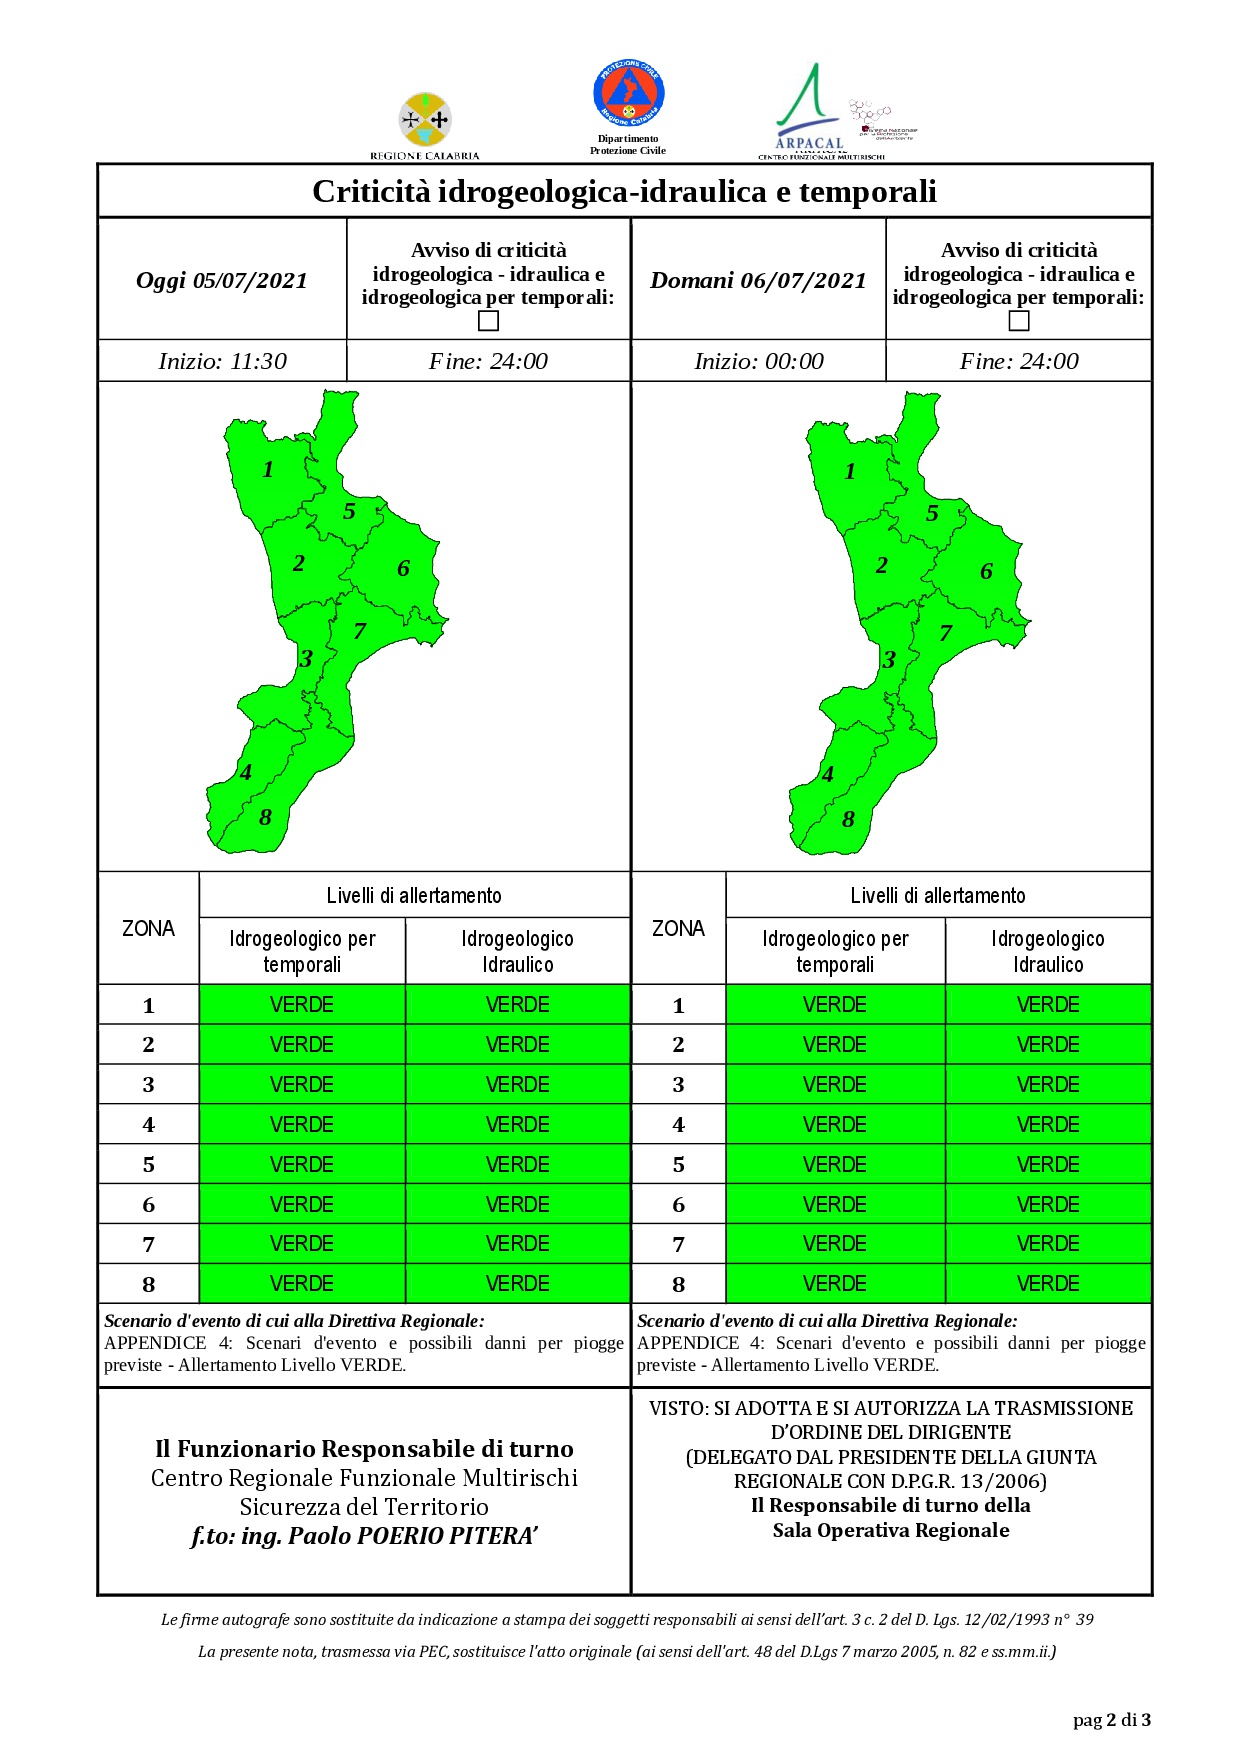 Criticità idrogeologica-idraulica e temporali in Calabria 05-07-2021